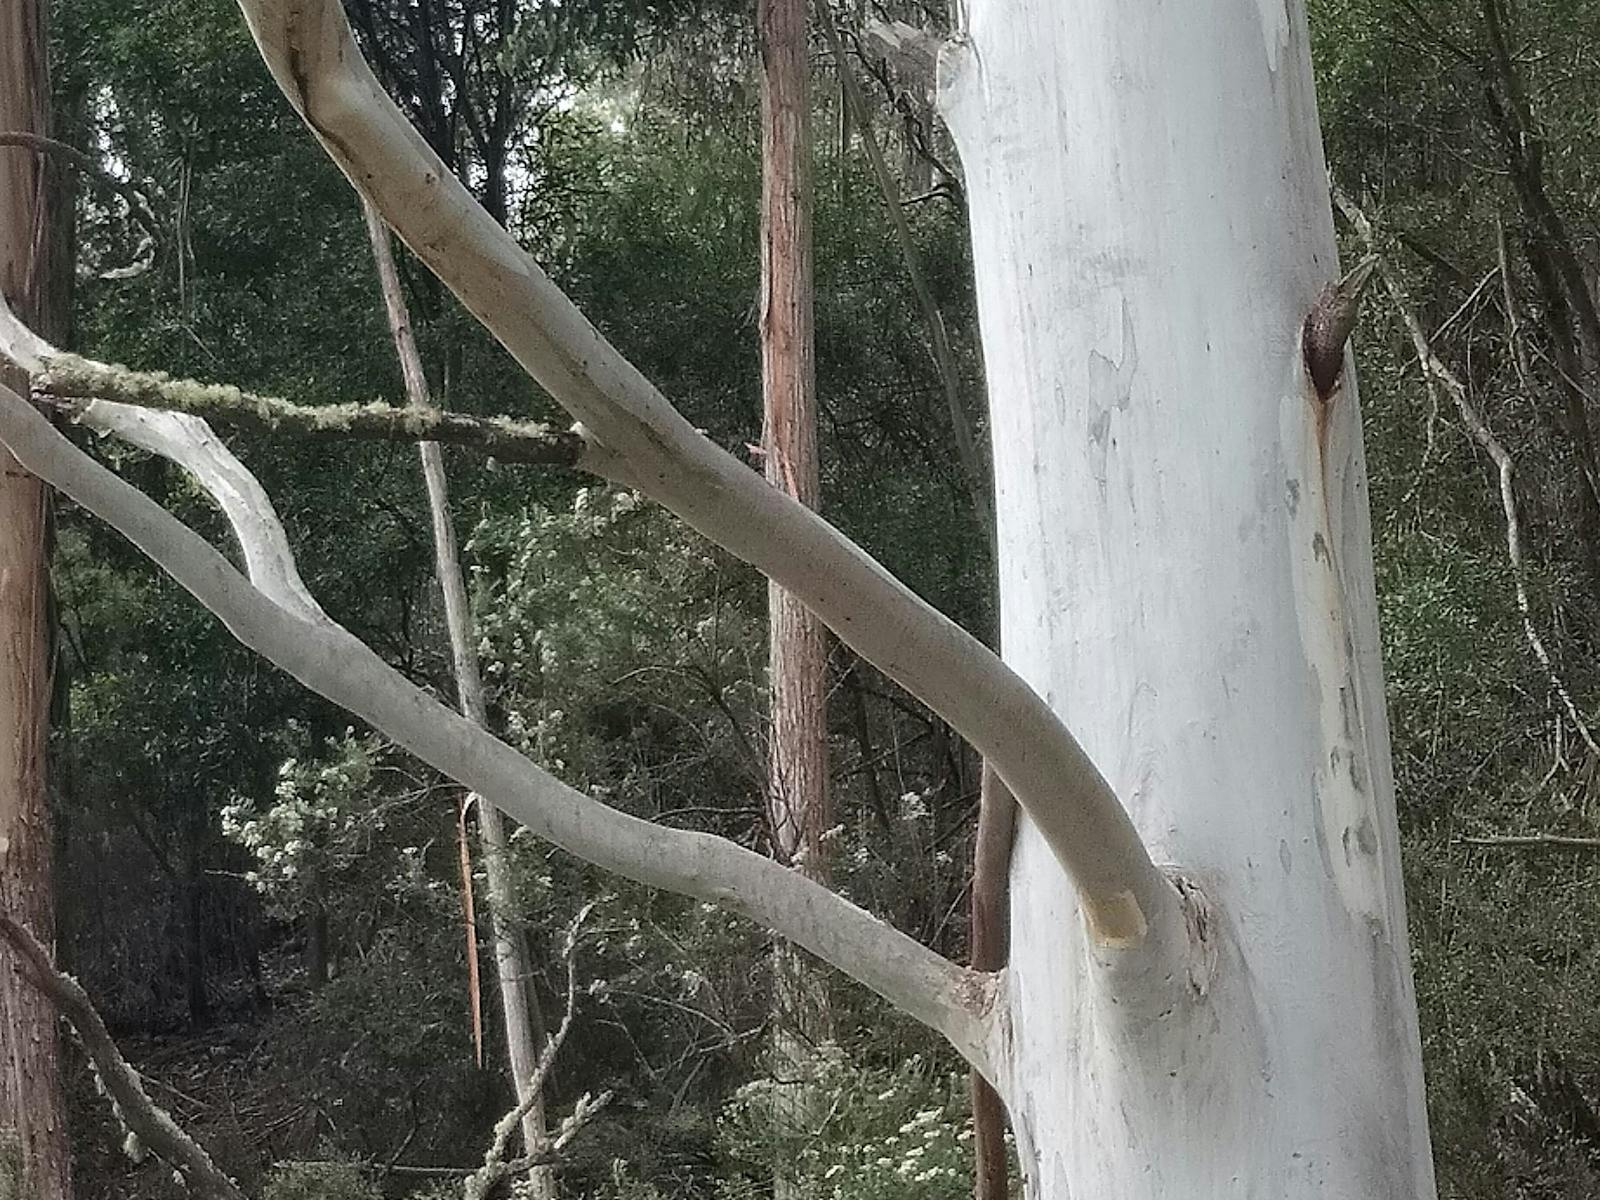 White gums or Eucalyptus Viminalis border the camping area